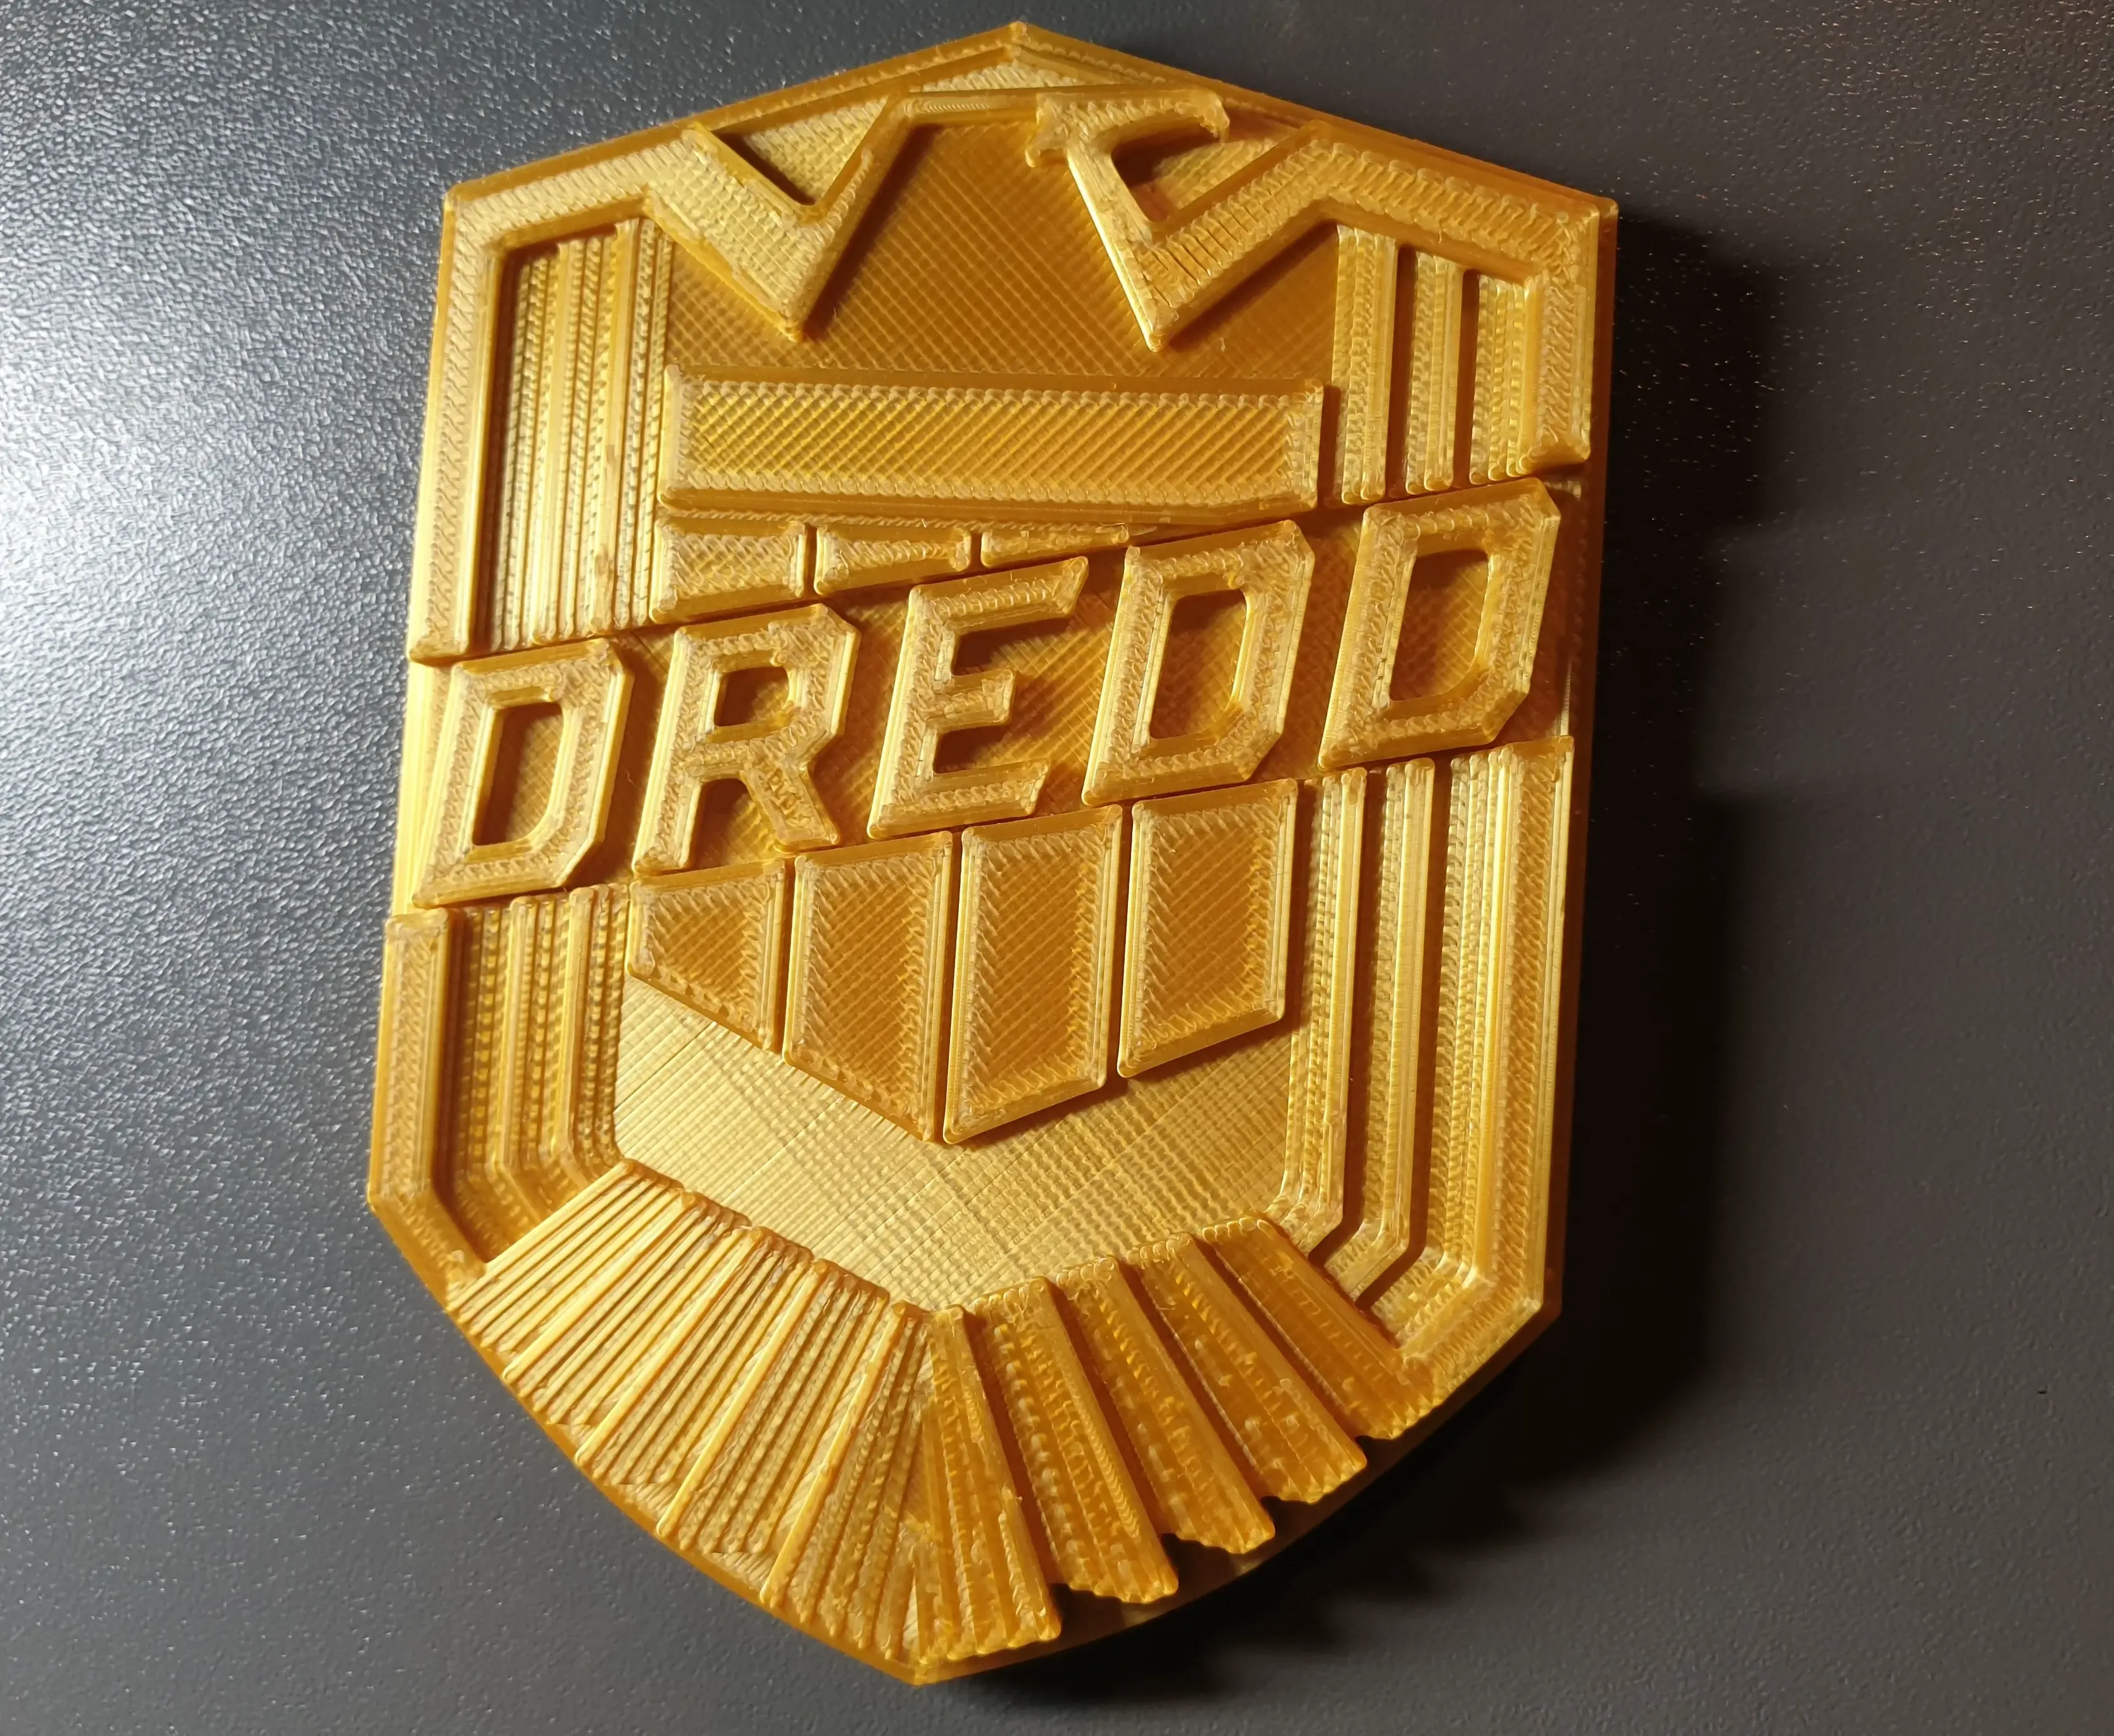 Judge Dredd Chest Badge Prop 2012 Movie Inspired